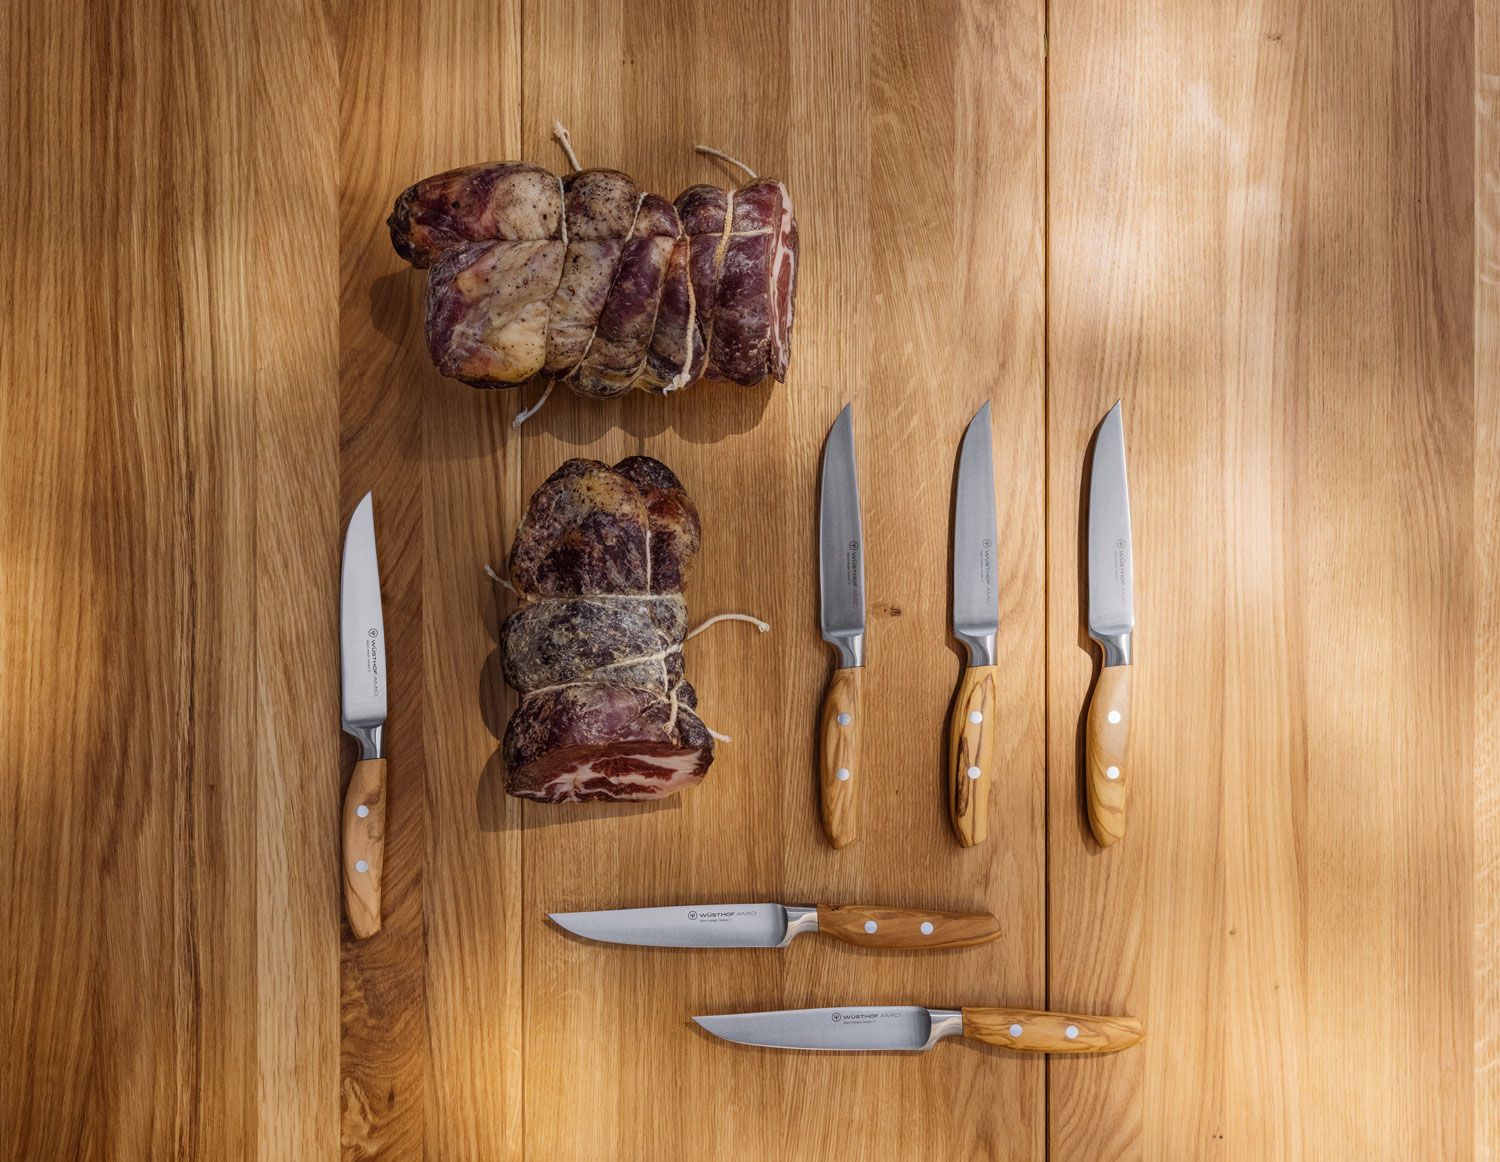 Wusthof 8-Piece Stainless Mignon Steak Knife Set, Olivewood